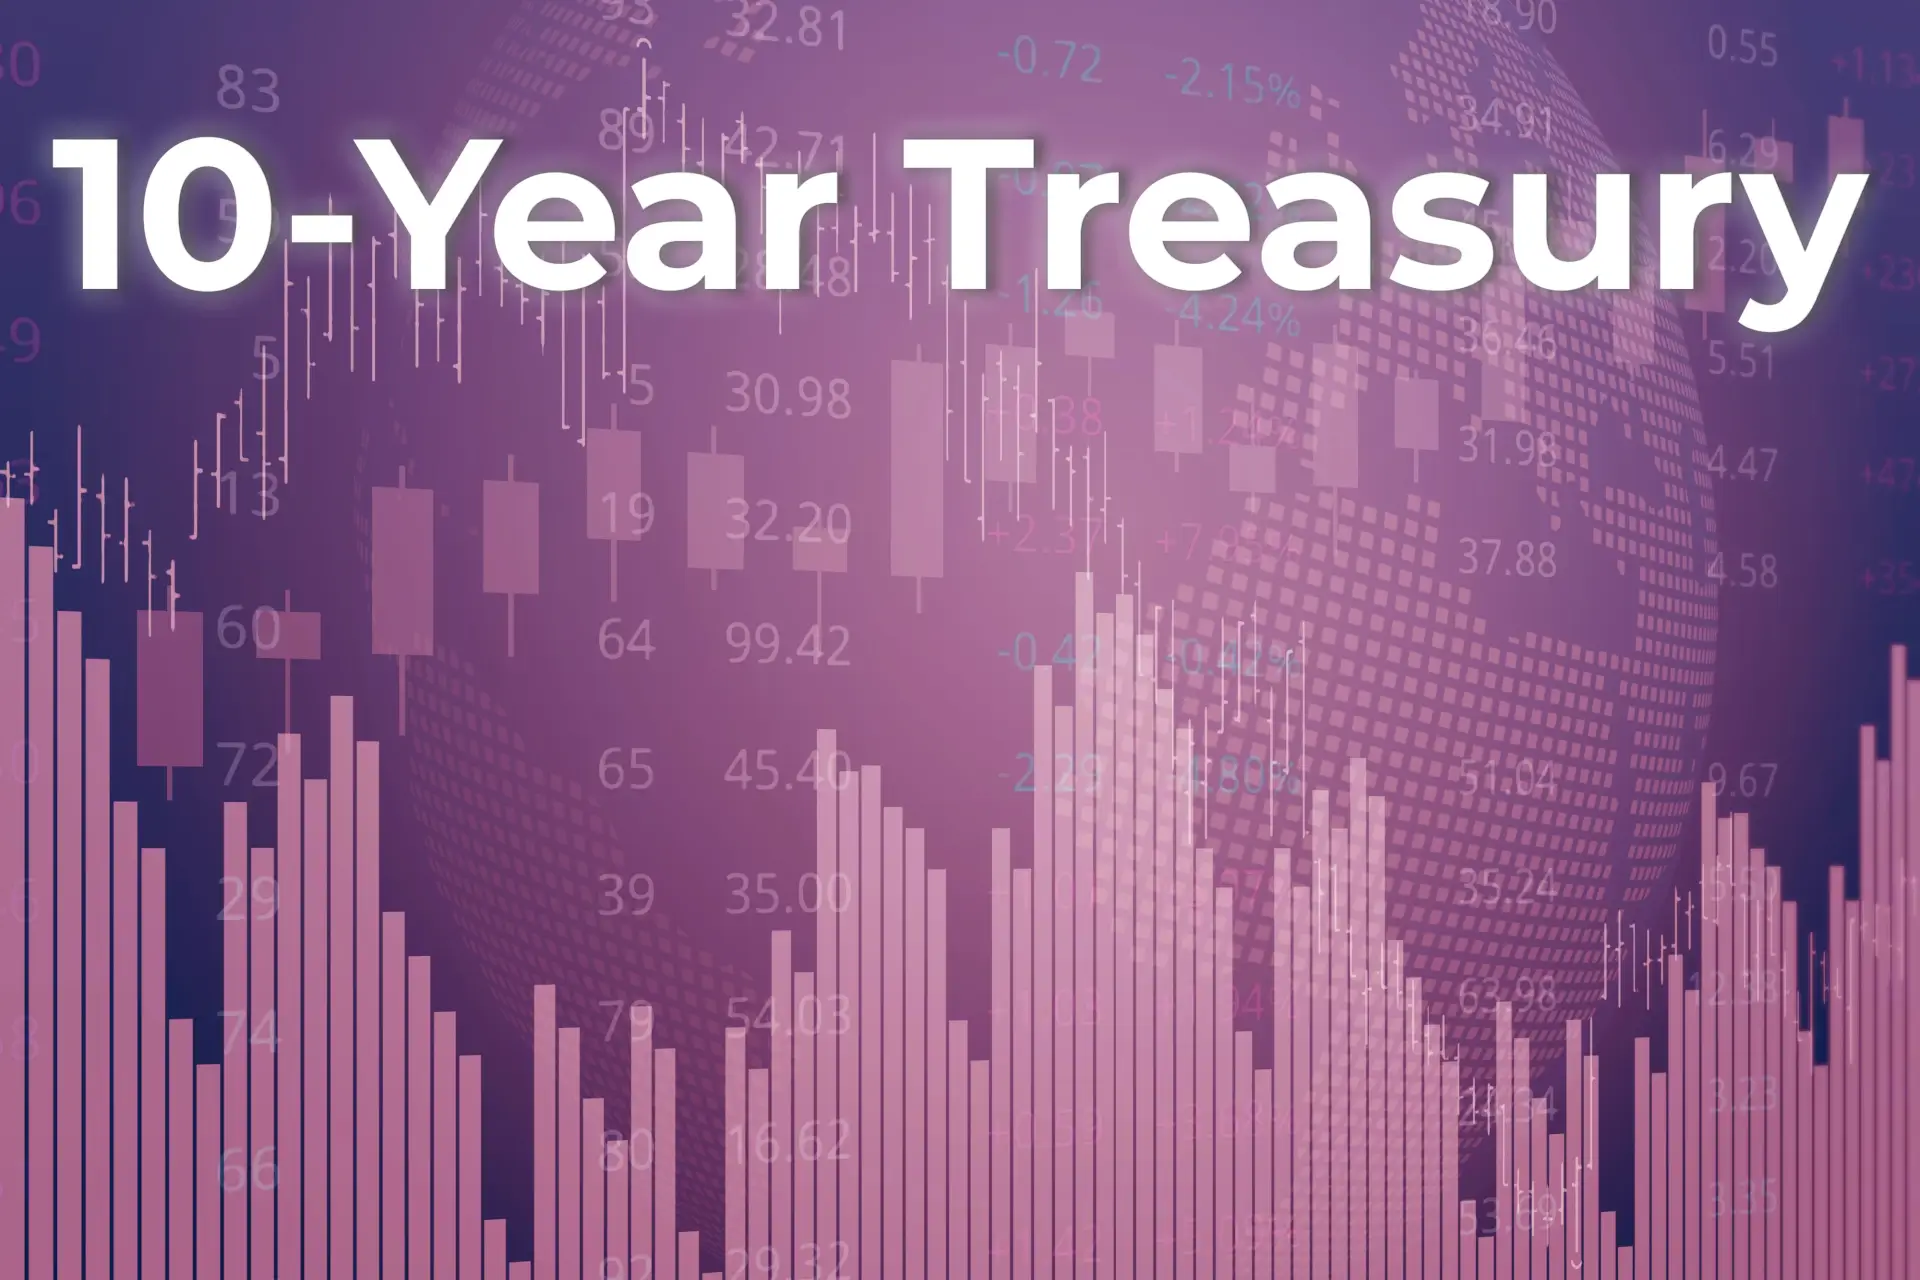 10 Year Treasury (Typically Tracks mortgage rates)